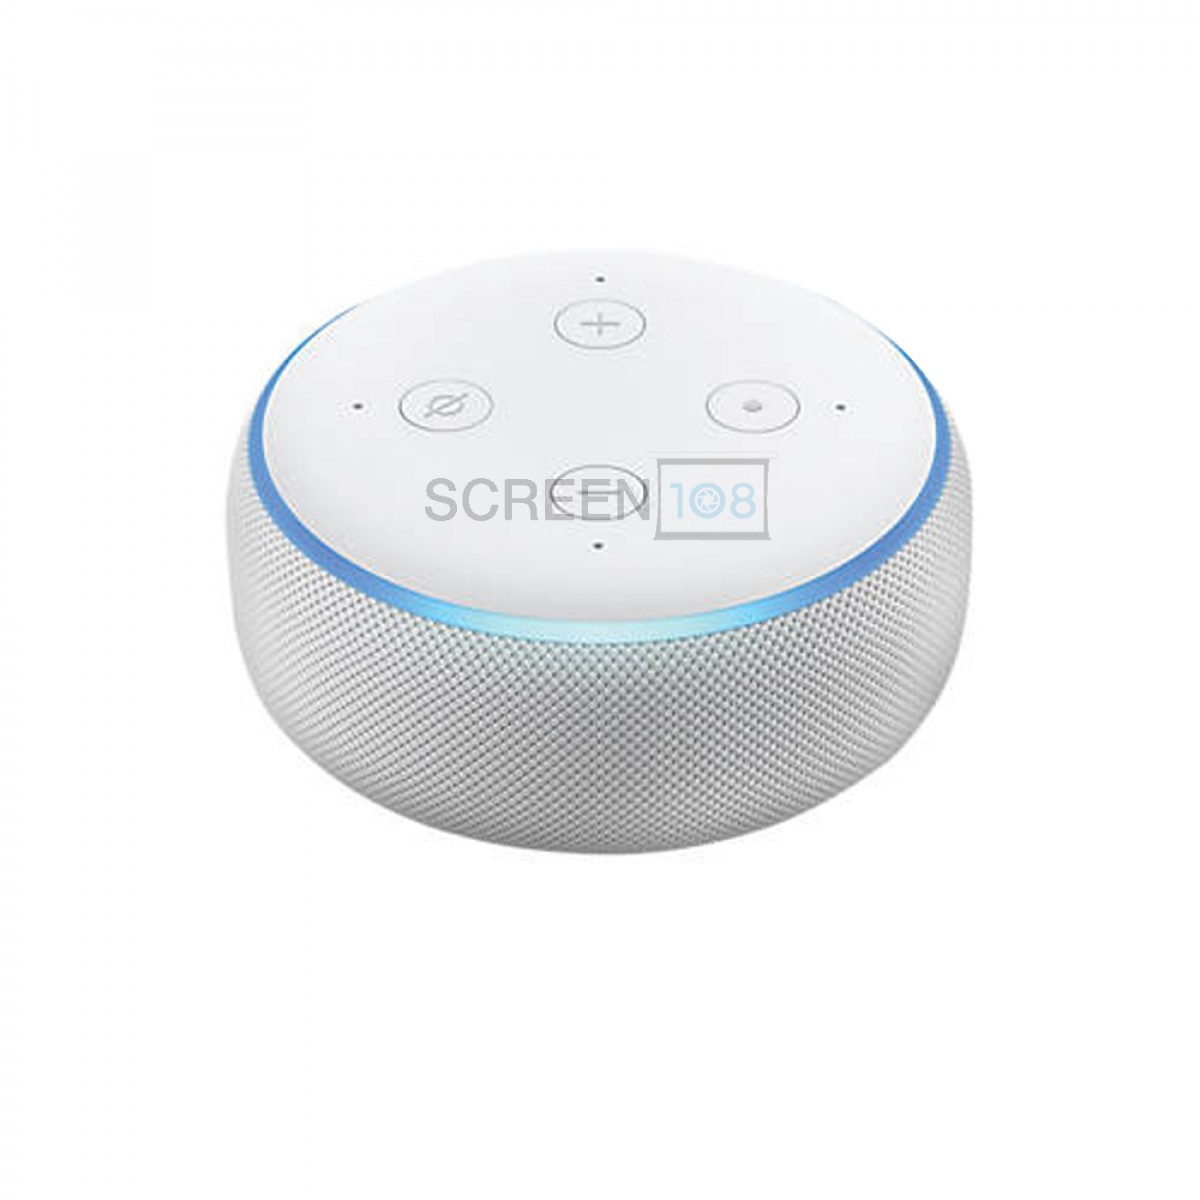  Echo Smart Speakers & Displays:  Devices